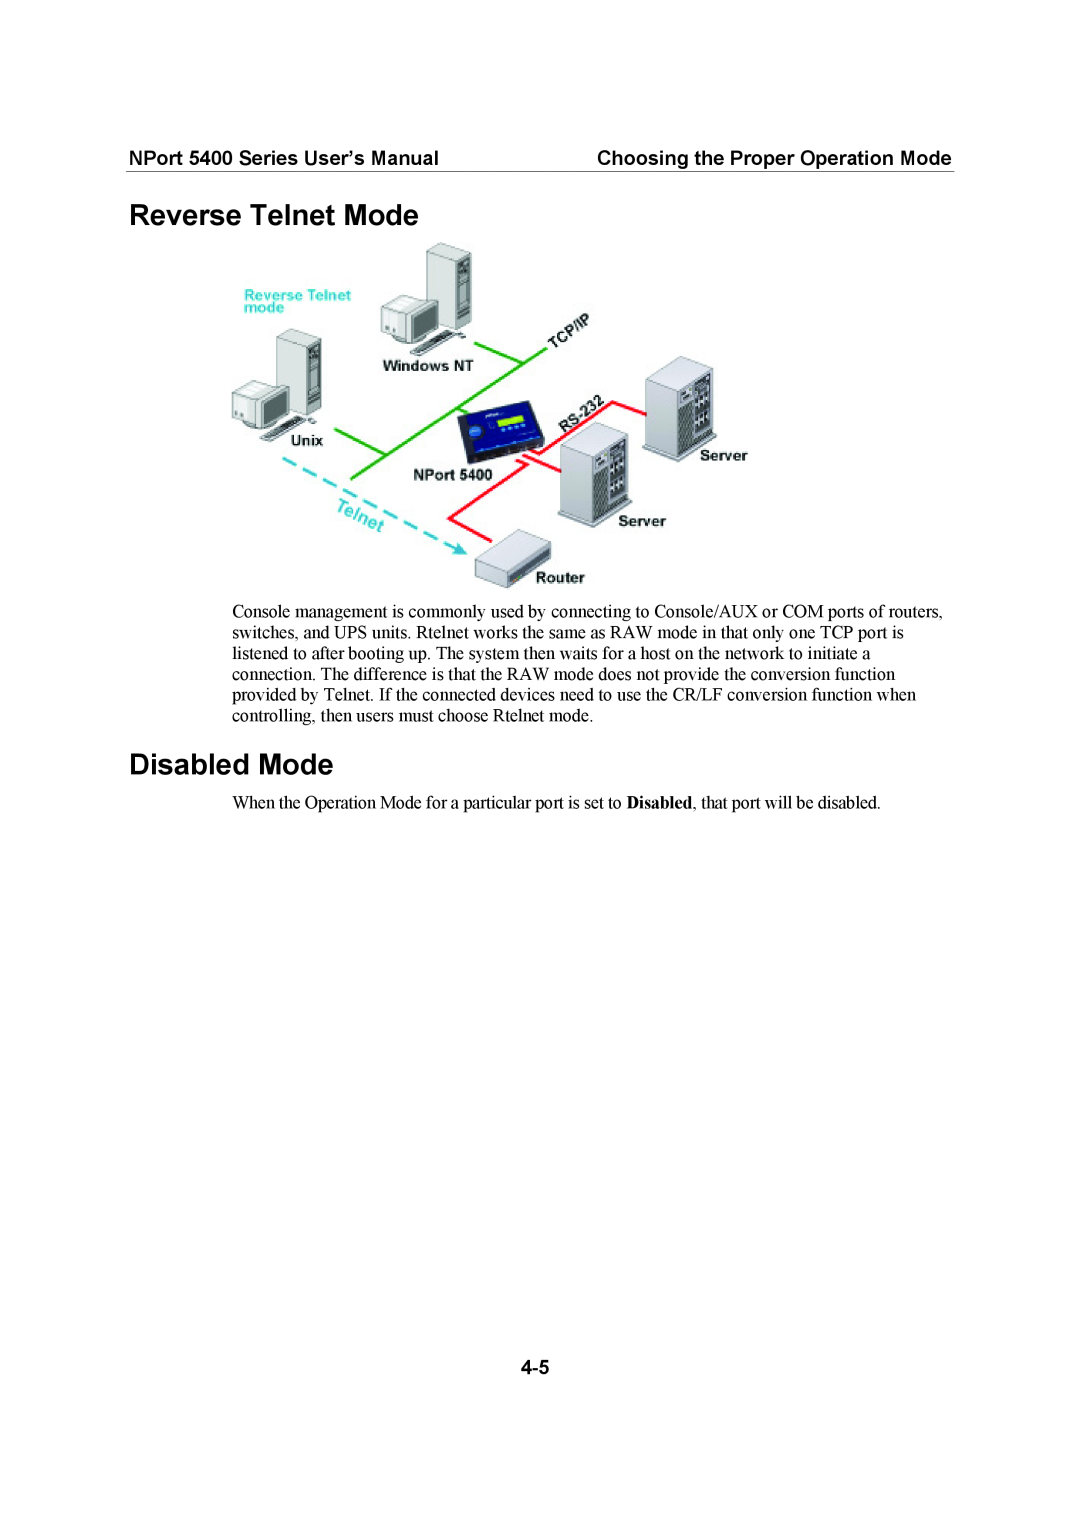 Moxa Technologies 5400 Series user manual Reverse Telnet Mode, Disabled Mode, Choosing the Proper Operation Mode 